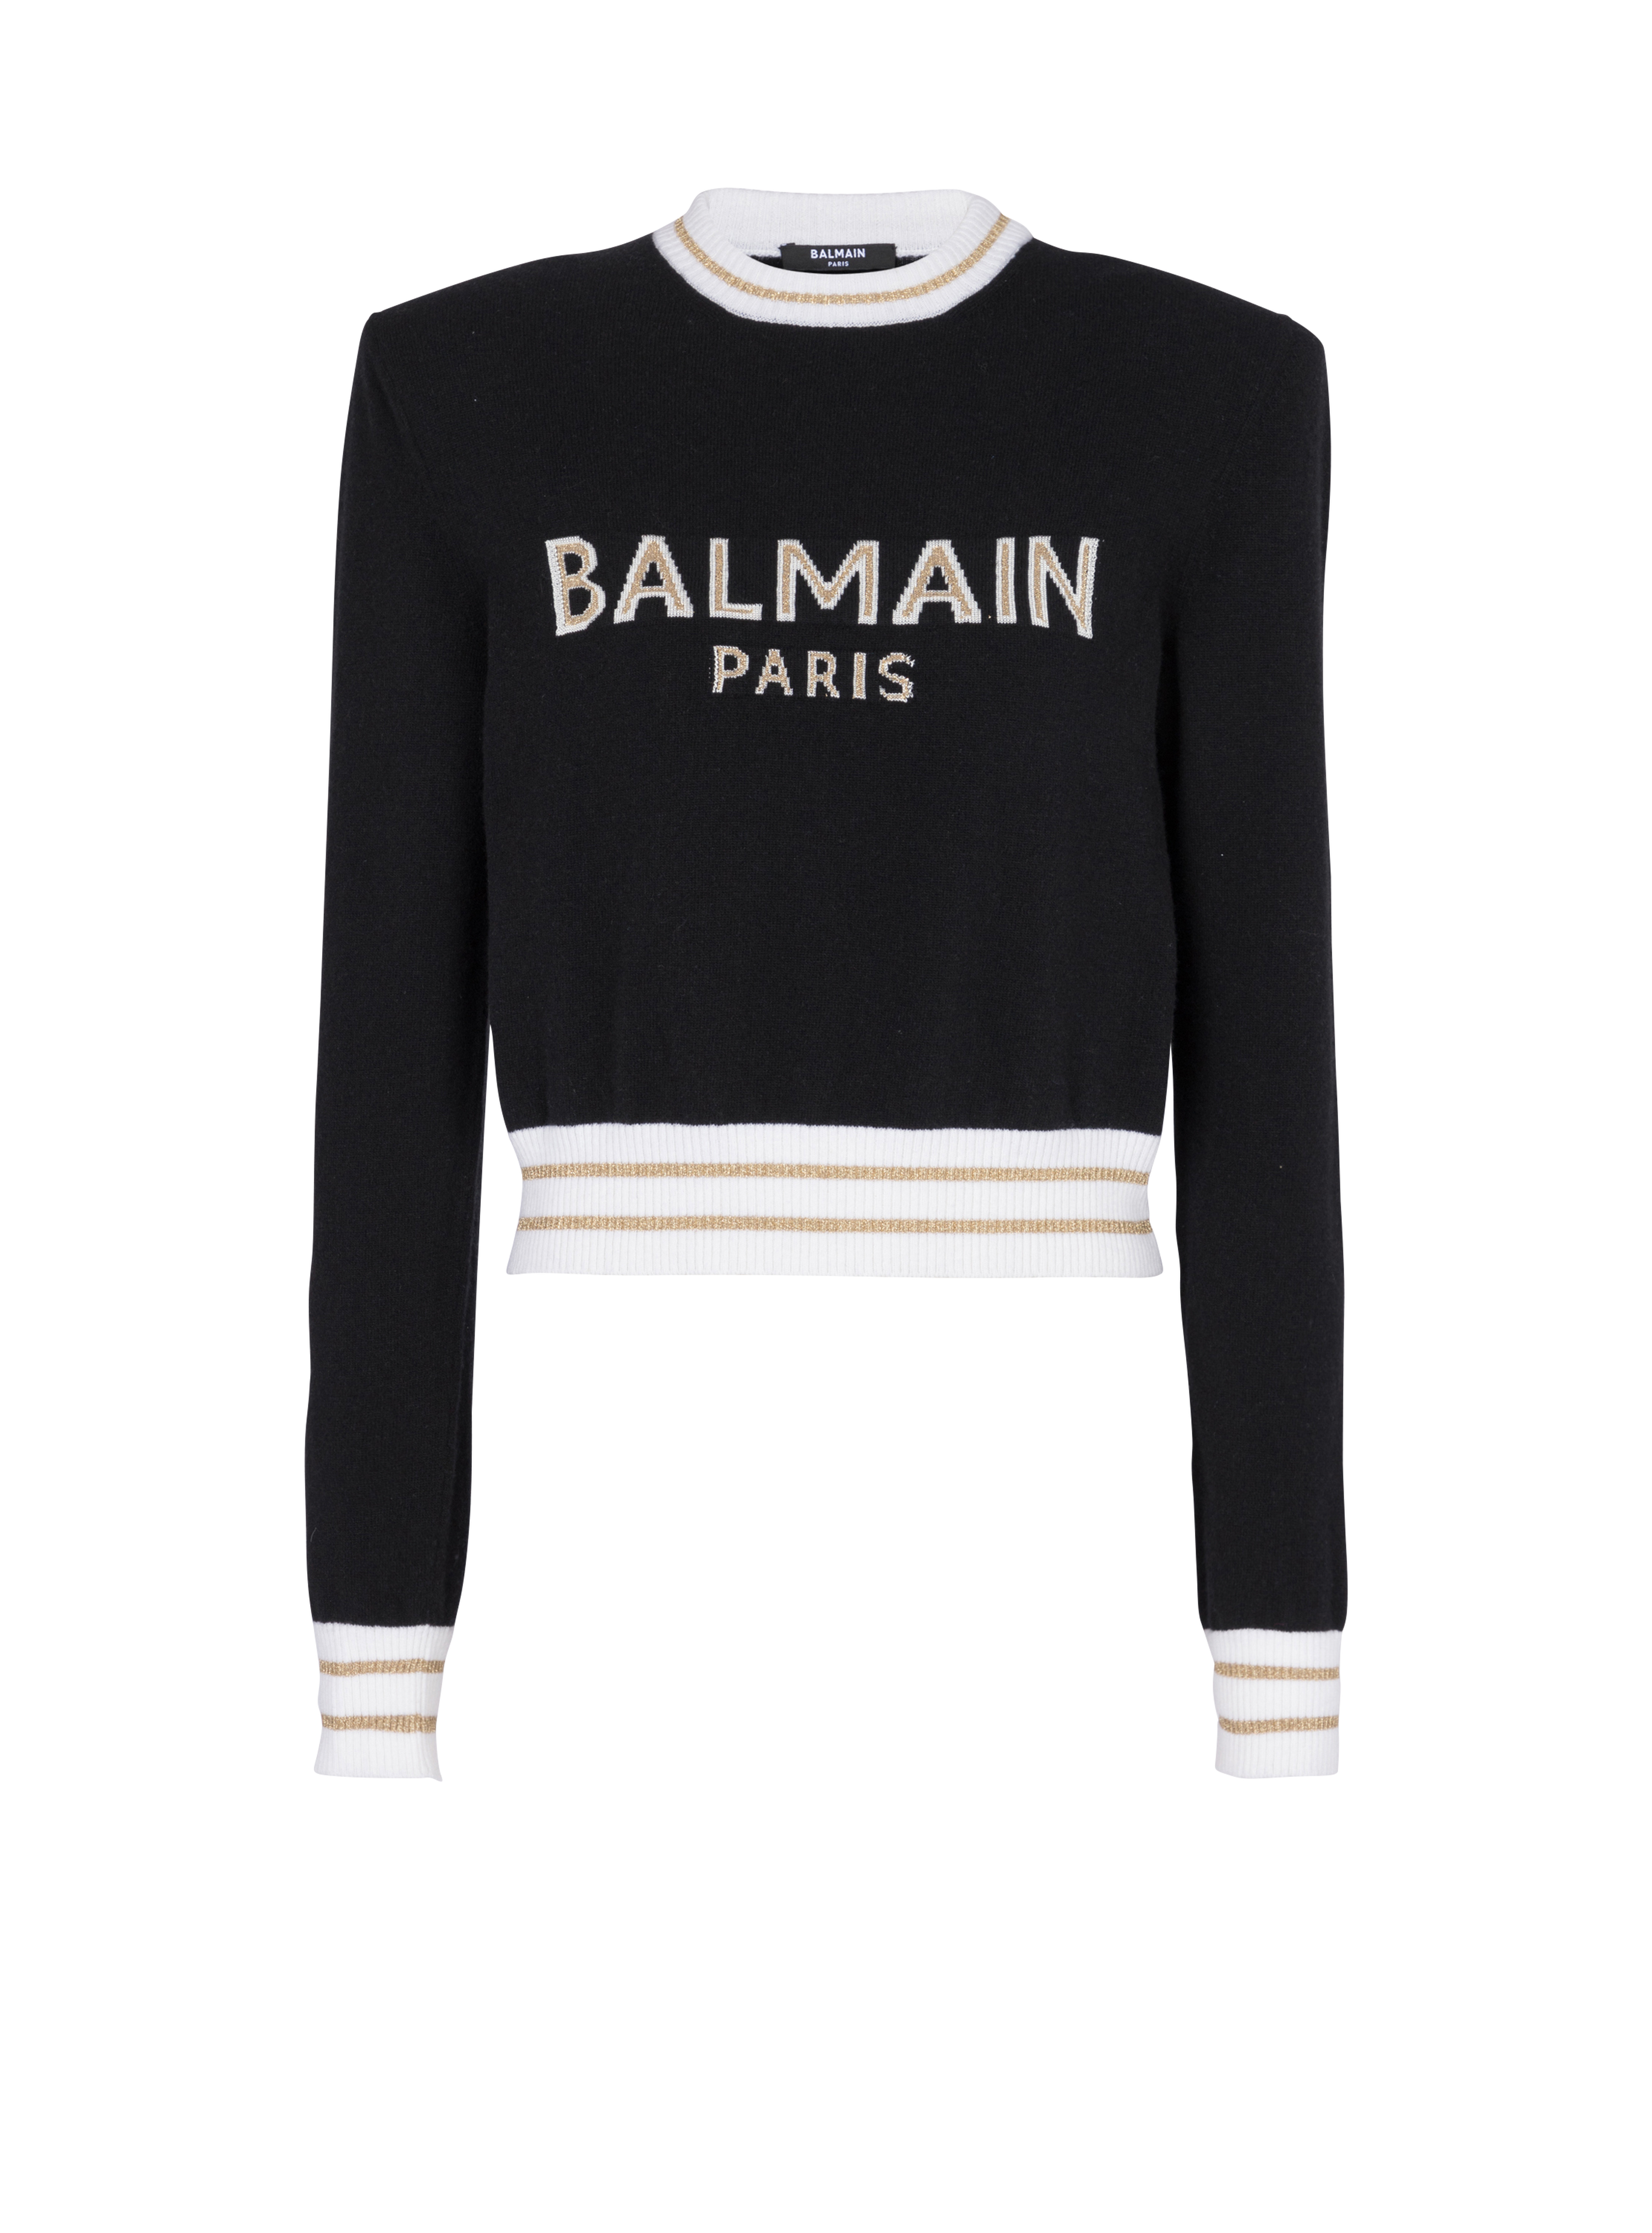 Cropped wool jumper with Balmain logo, black